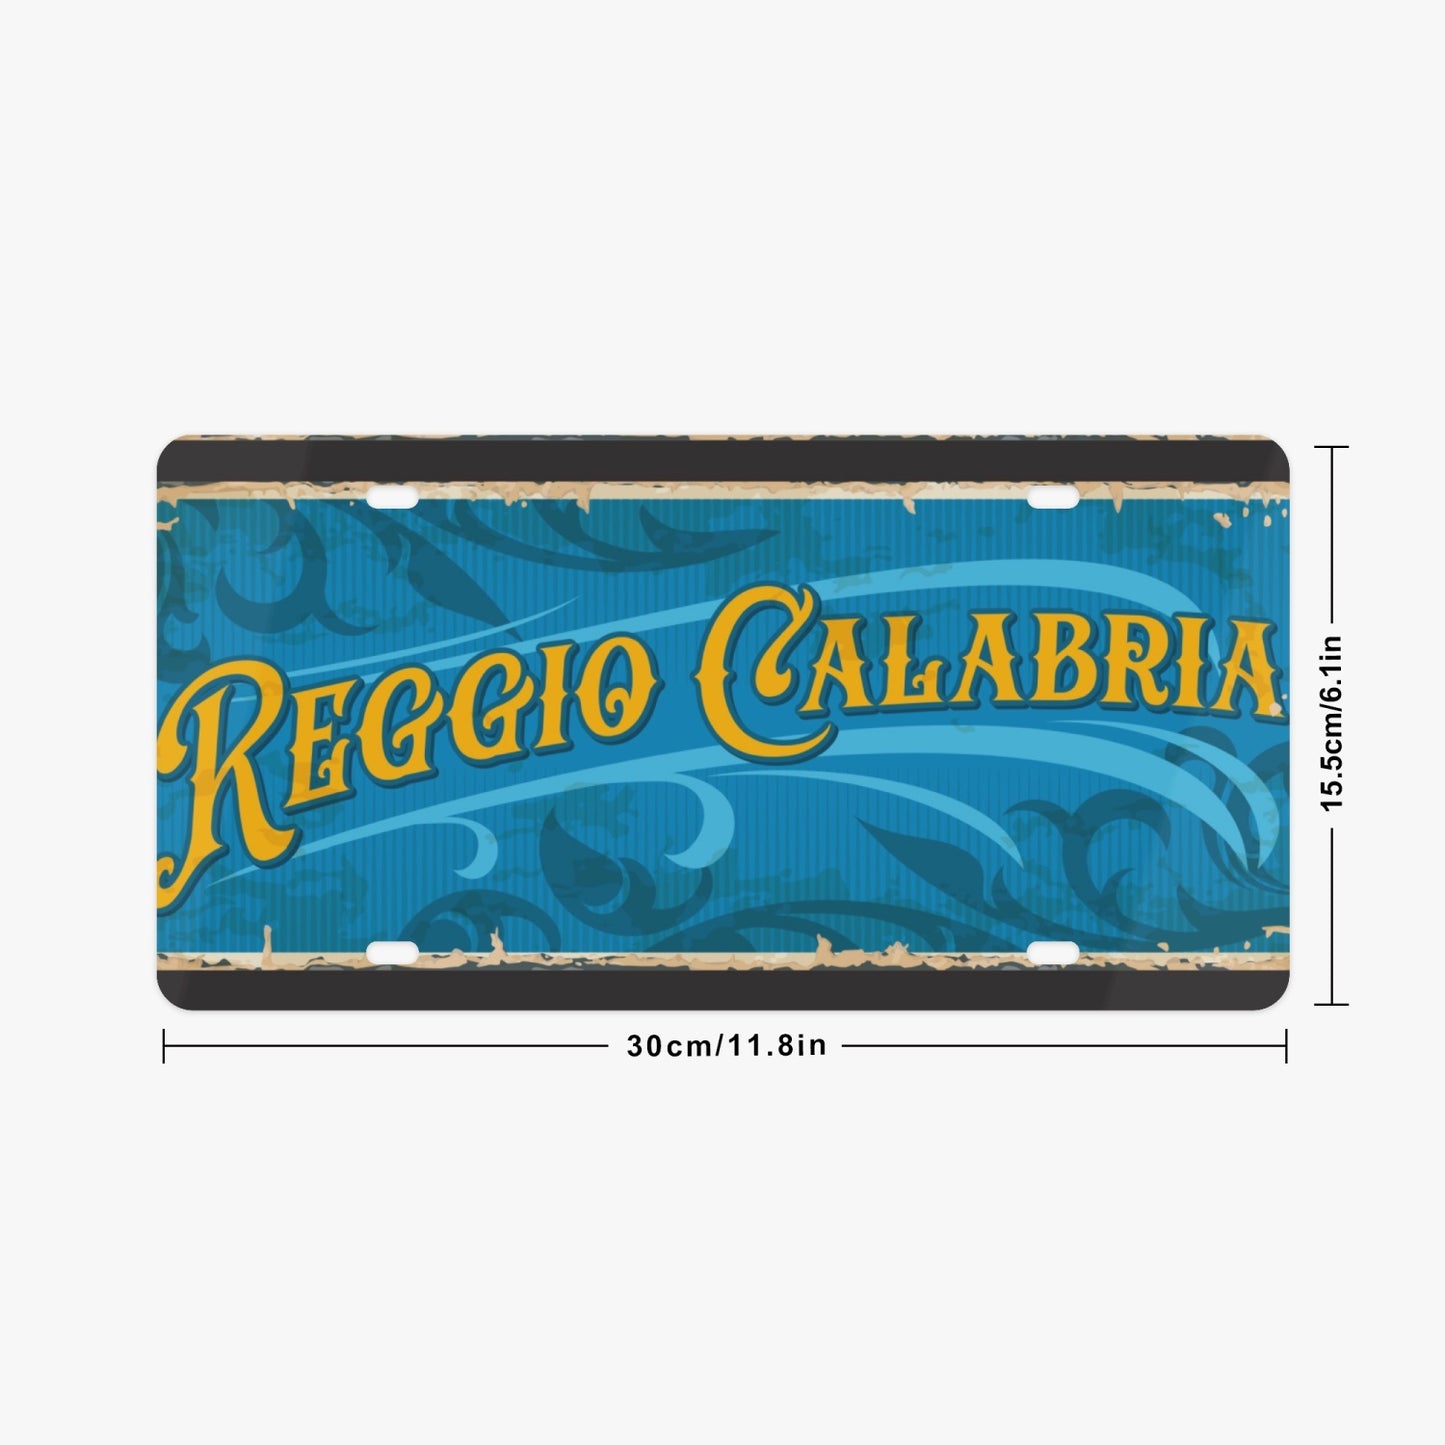 Targa Reggio Calabria Stile Italiano